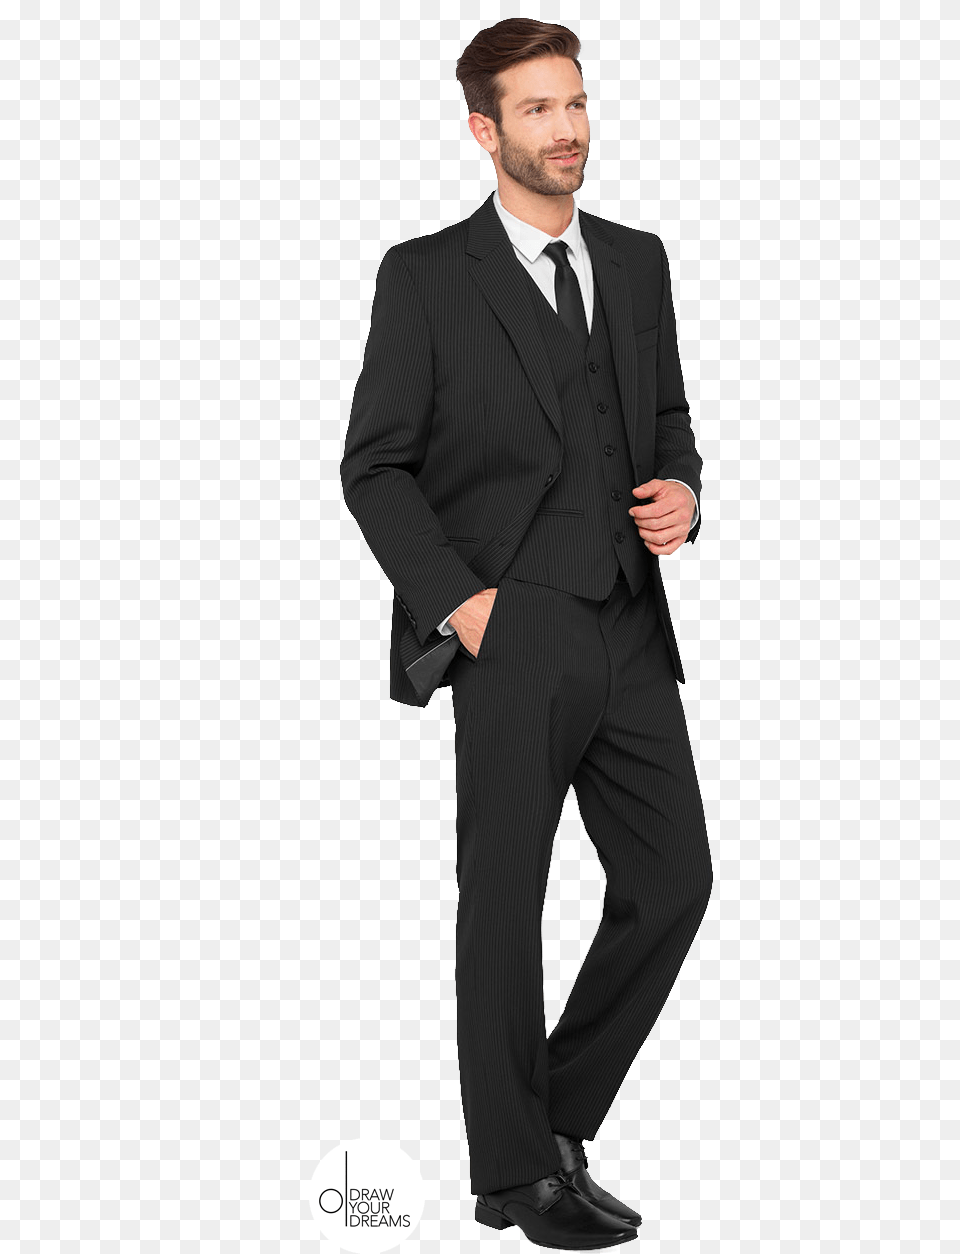 Personas Para Renders, Tuxedo, Suit, Formal Wear, Clothing Png Image